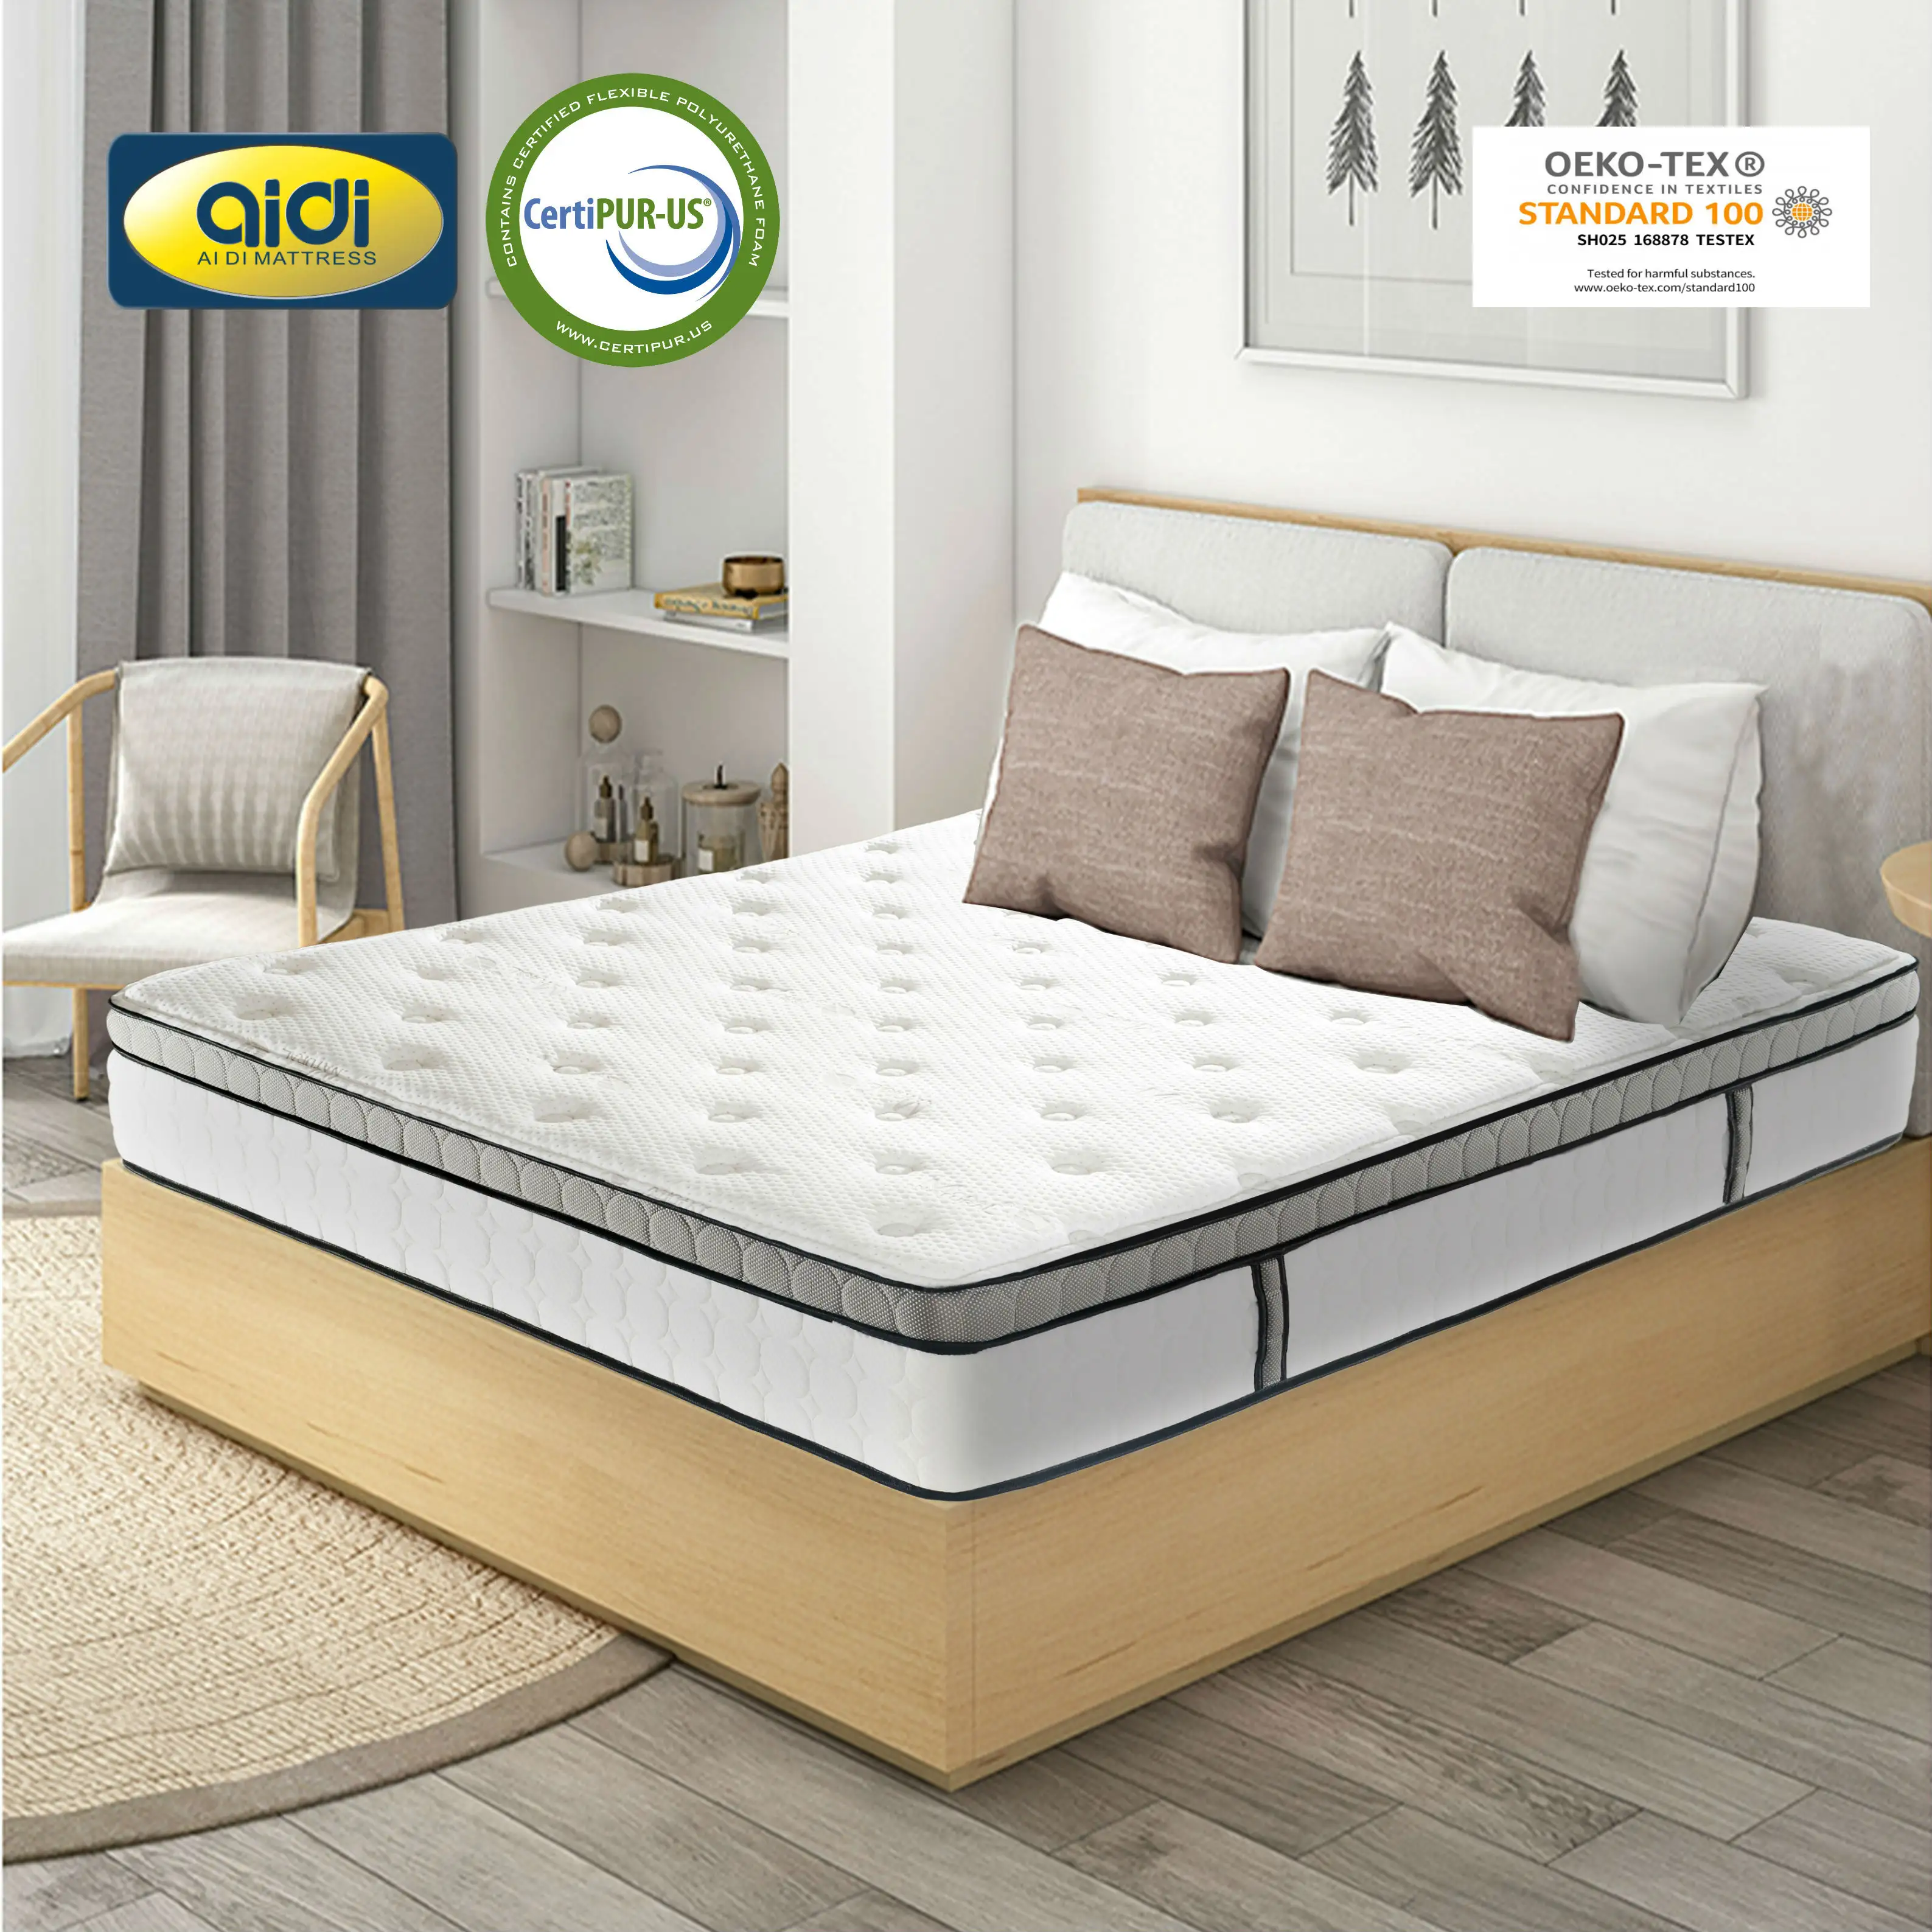 AIDI Luxury Euro Top Natural Latex Sleep Well Bed Matress Custom Full Size Pocket Coil Spring Gel Memory Foam Hybrid Mattress